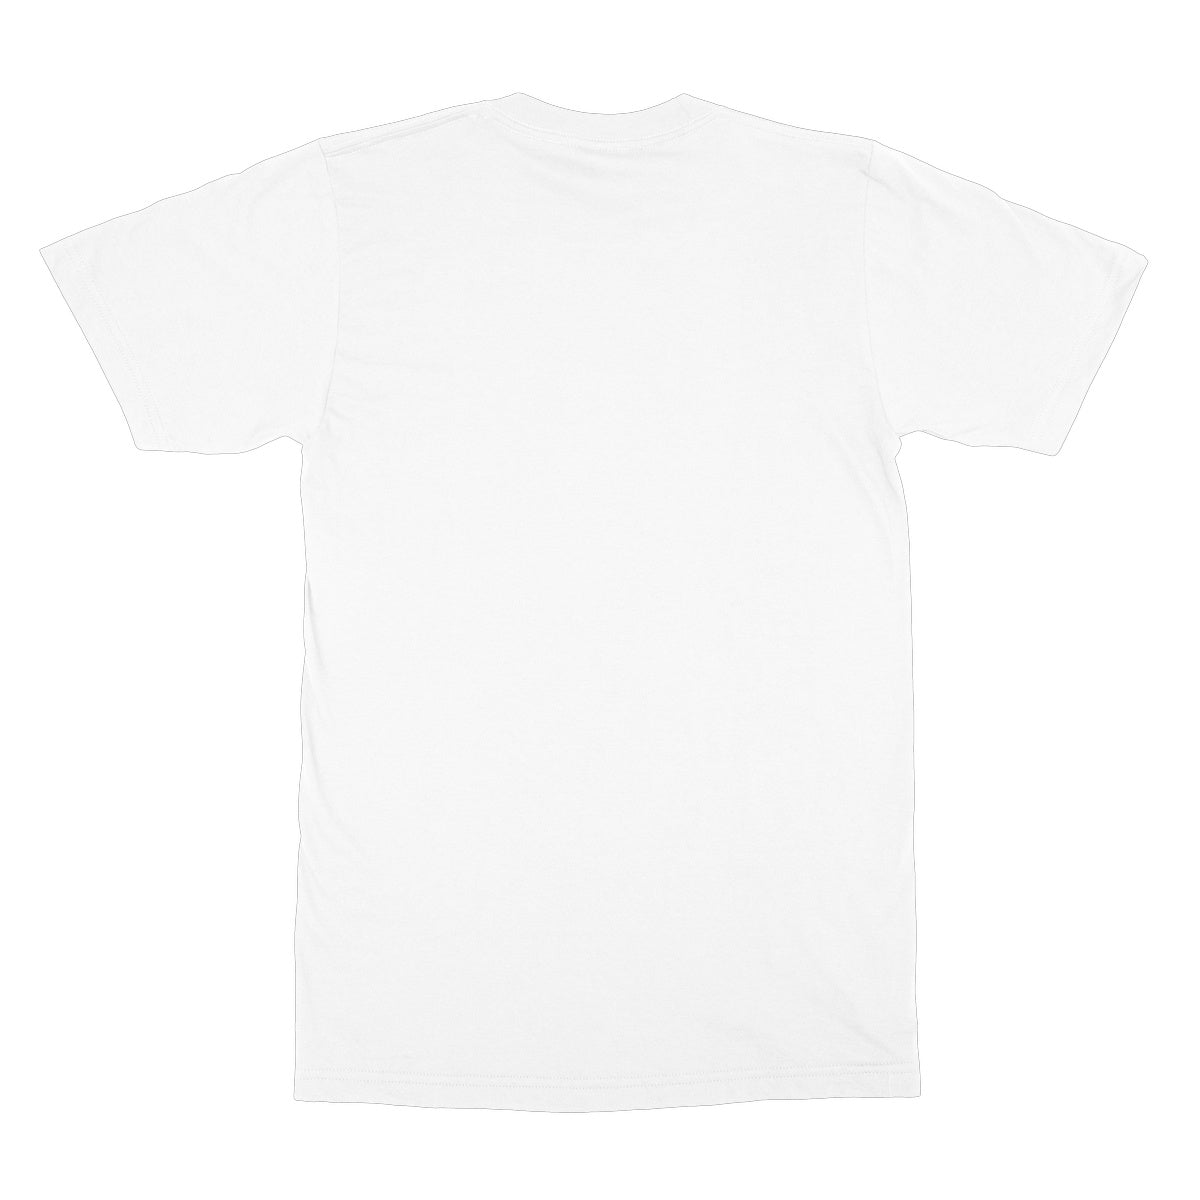 Alba T-Shirt